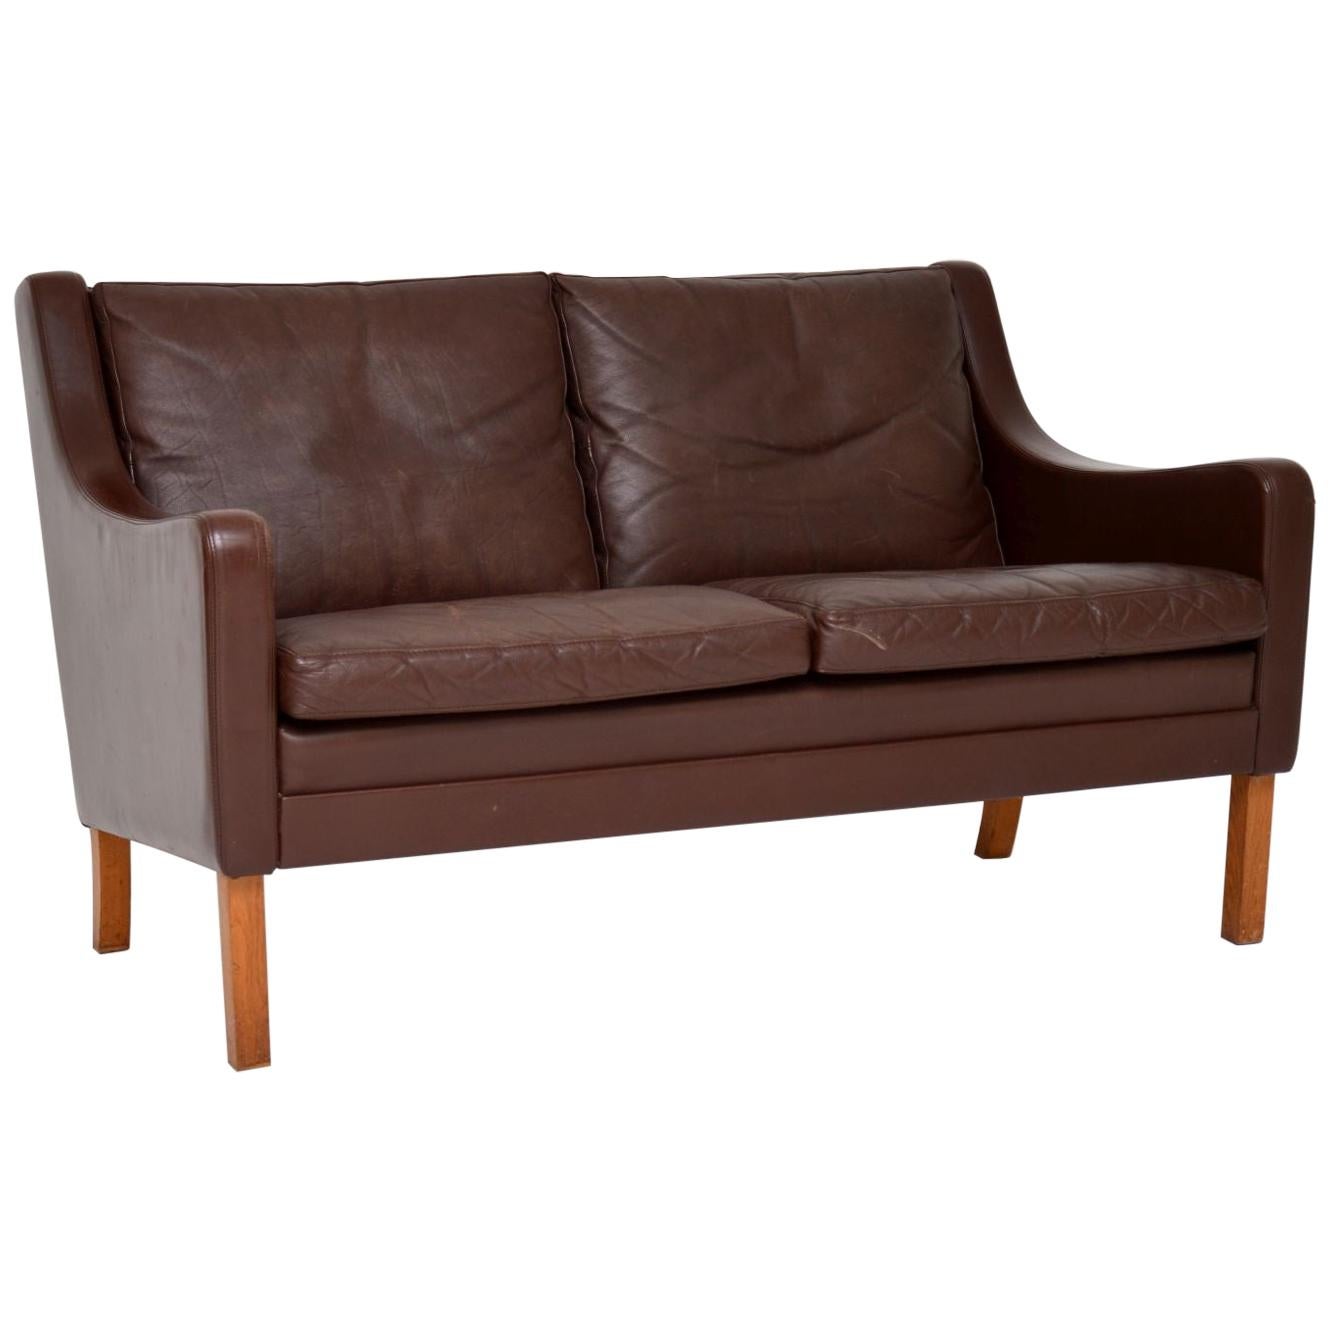 1960s Danish Vintage Leather Two-Seat Sofa